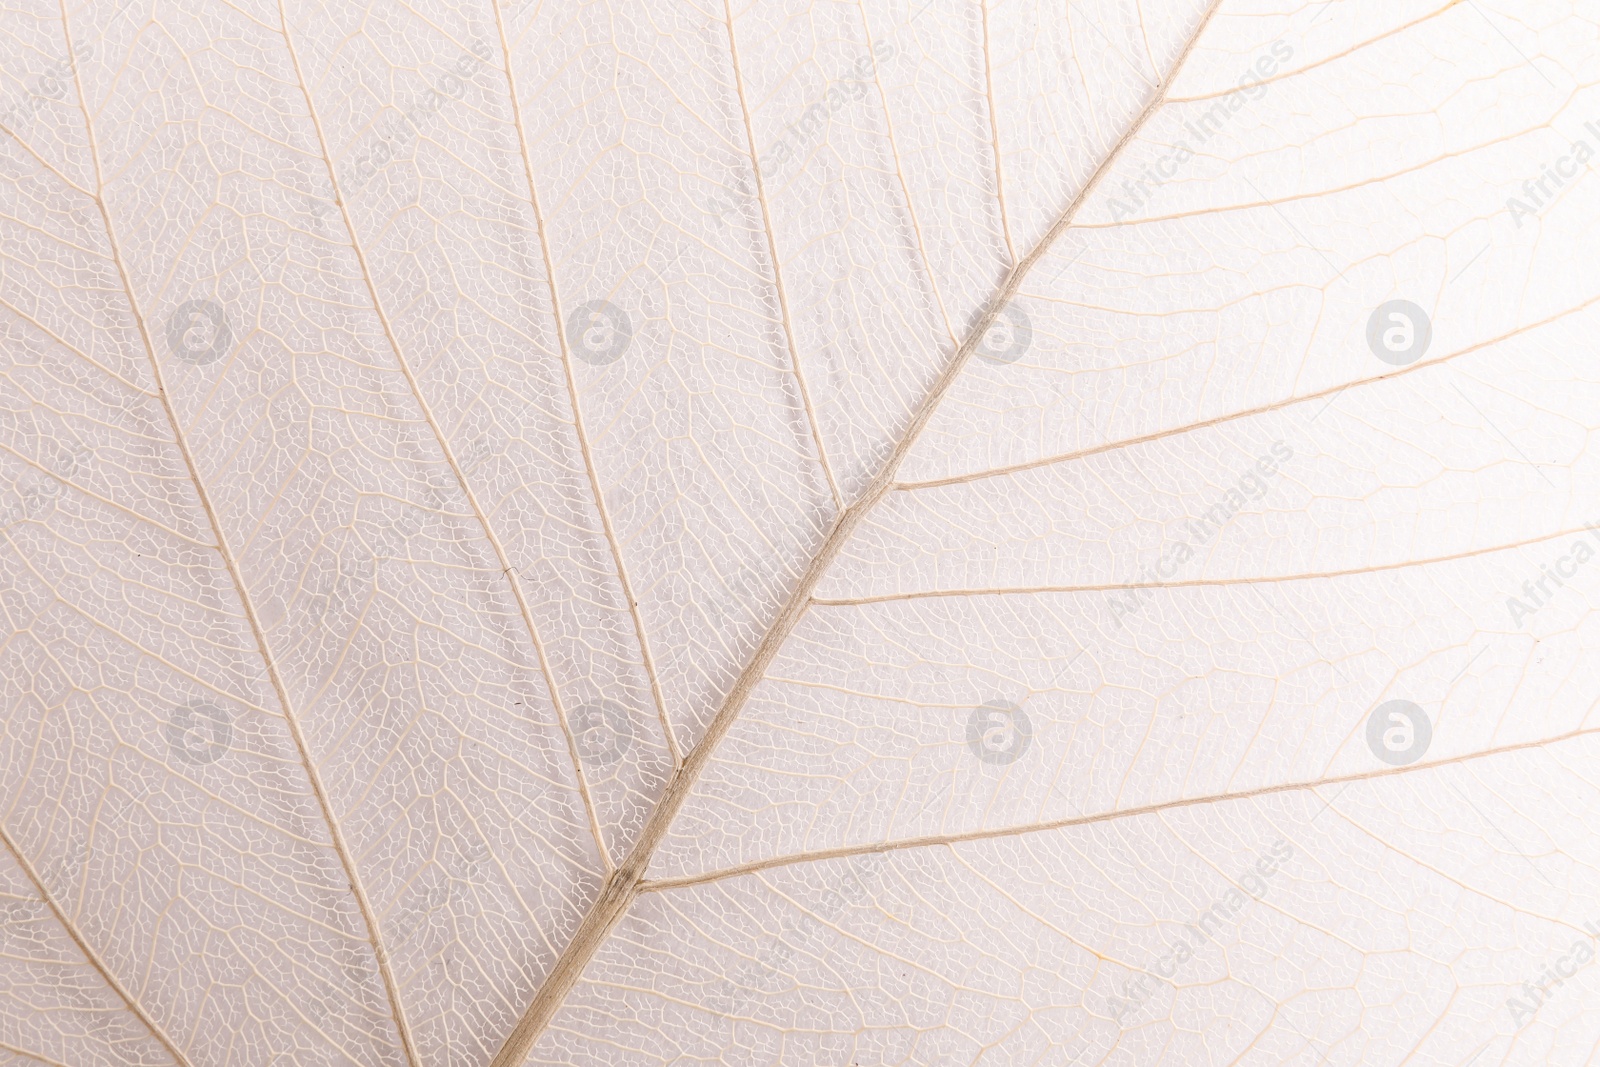 Photo of Closeup view of beautiful decorative skeleton leaf